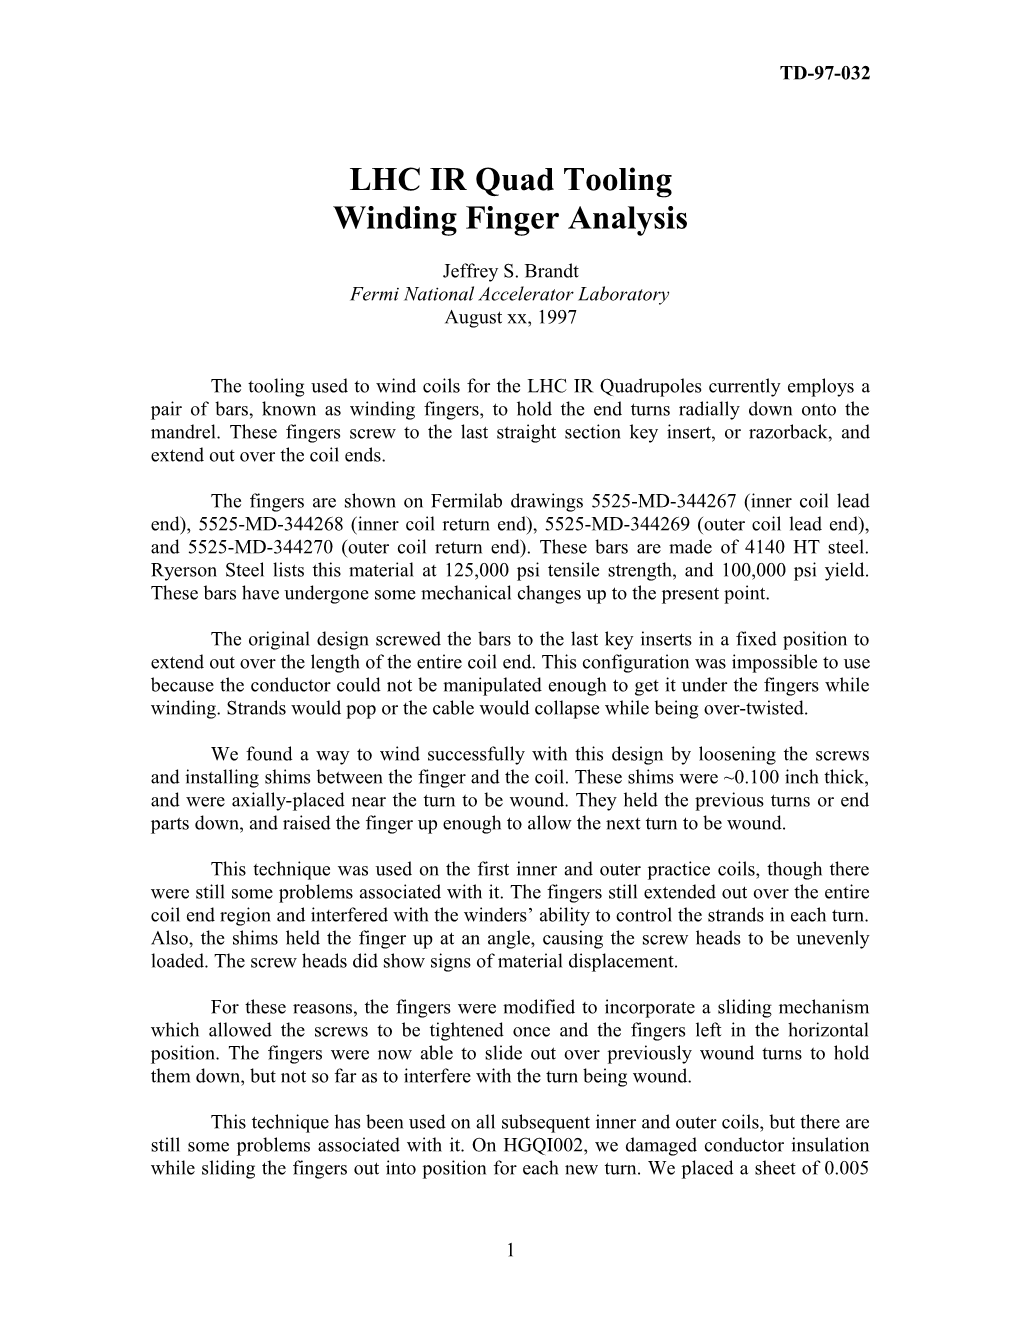 LHC IR Quad Tooling